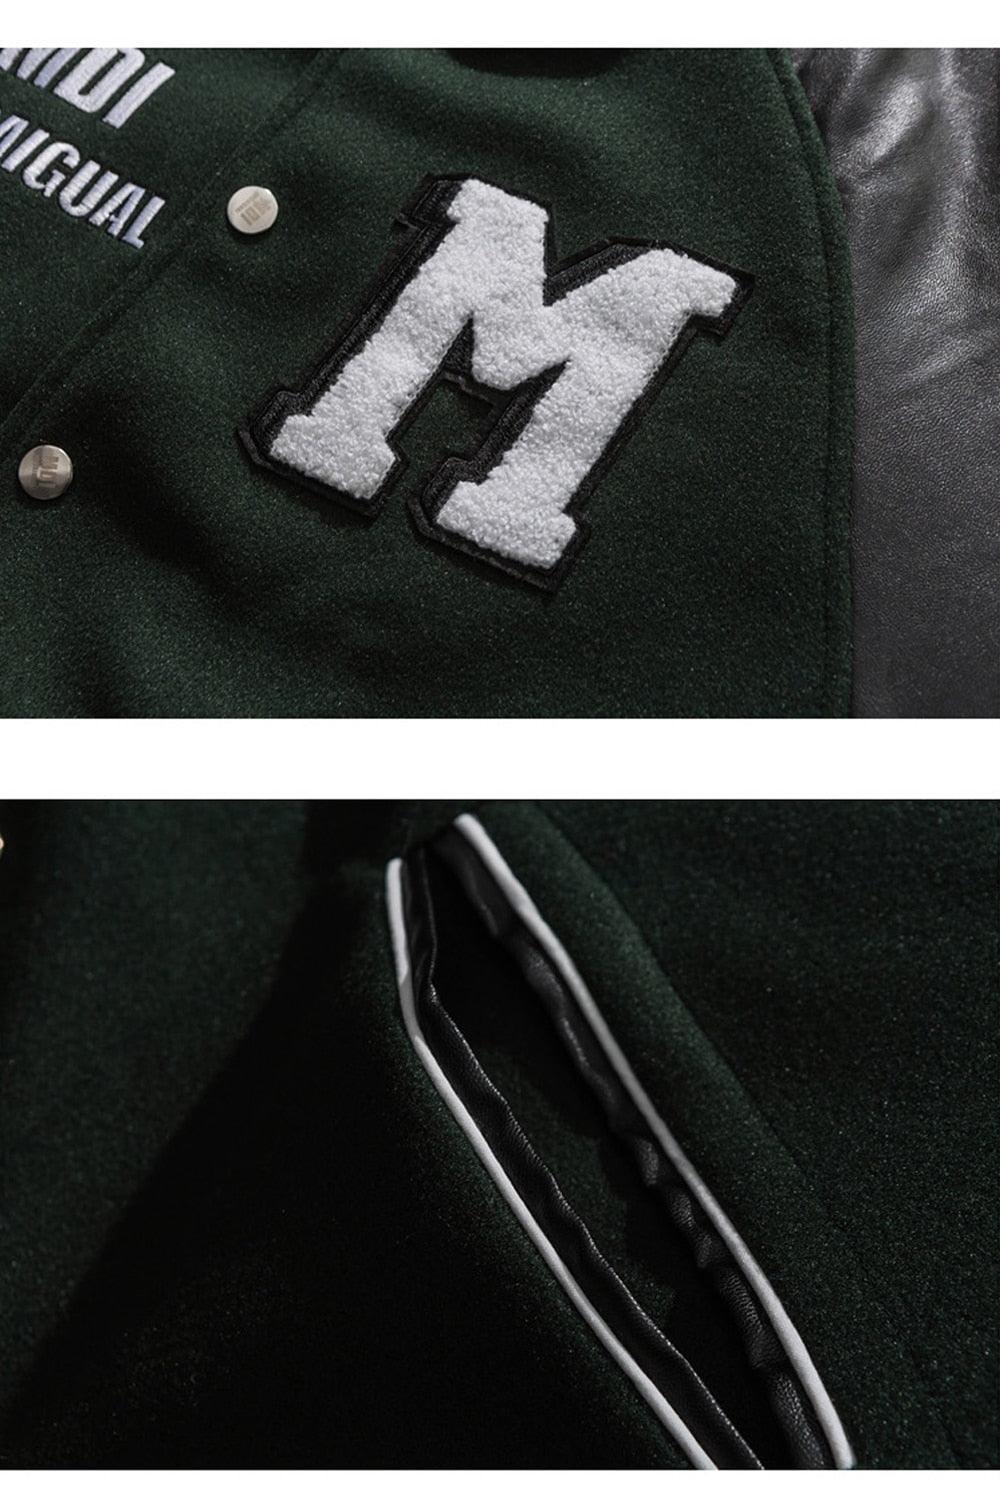 LUXENFY™ - MDI MEDAIGUAL Jacket luxenfy.com